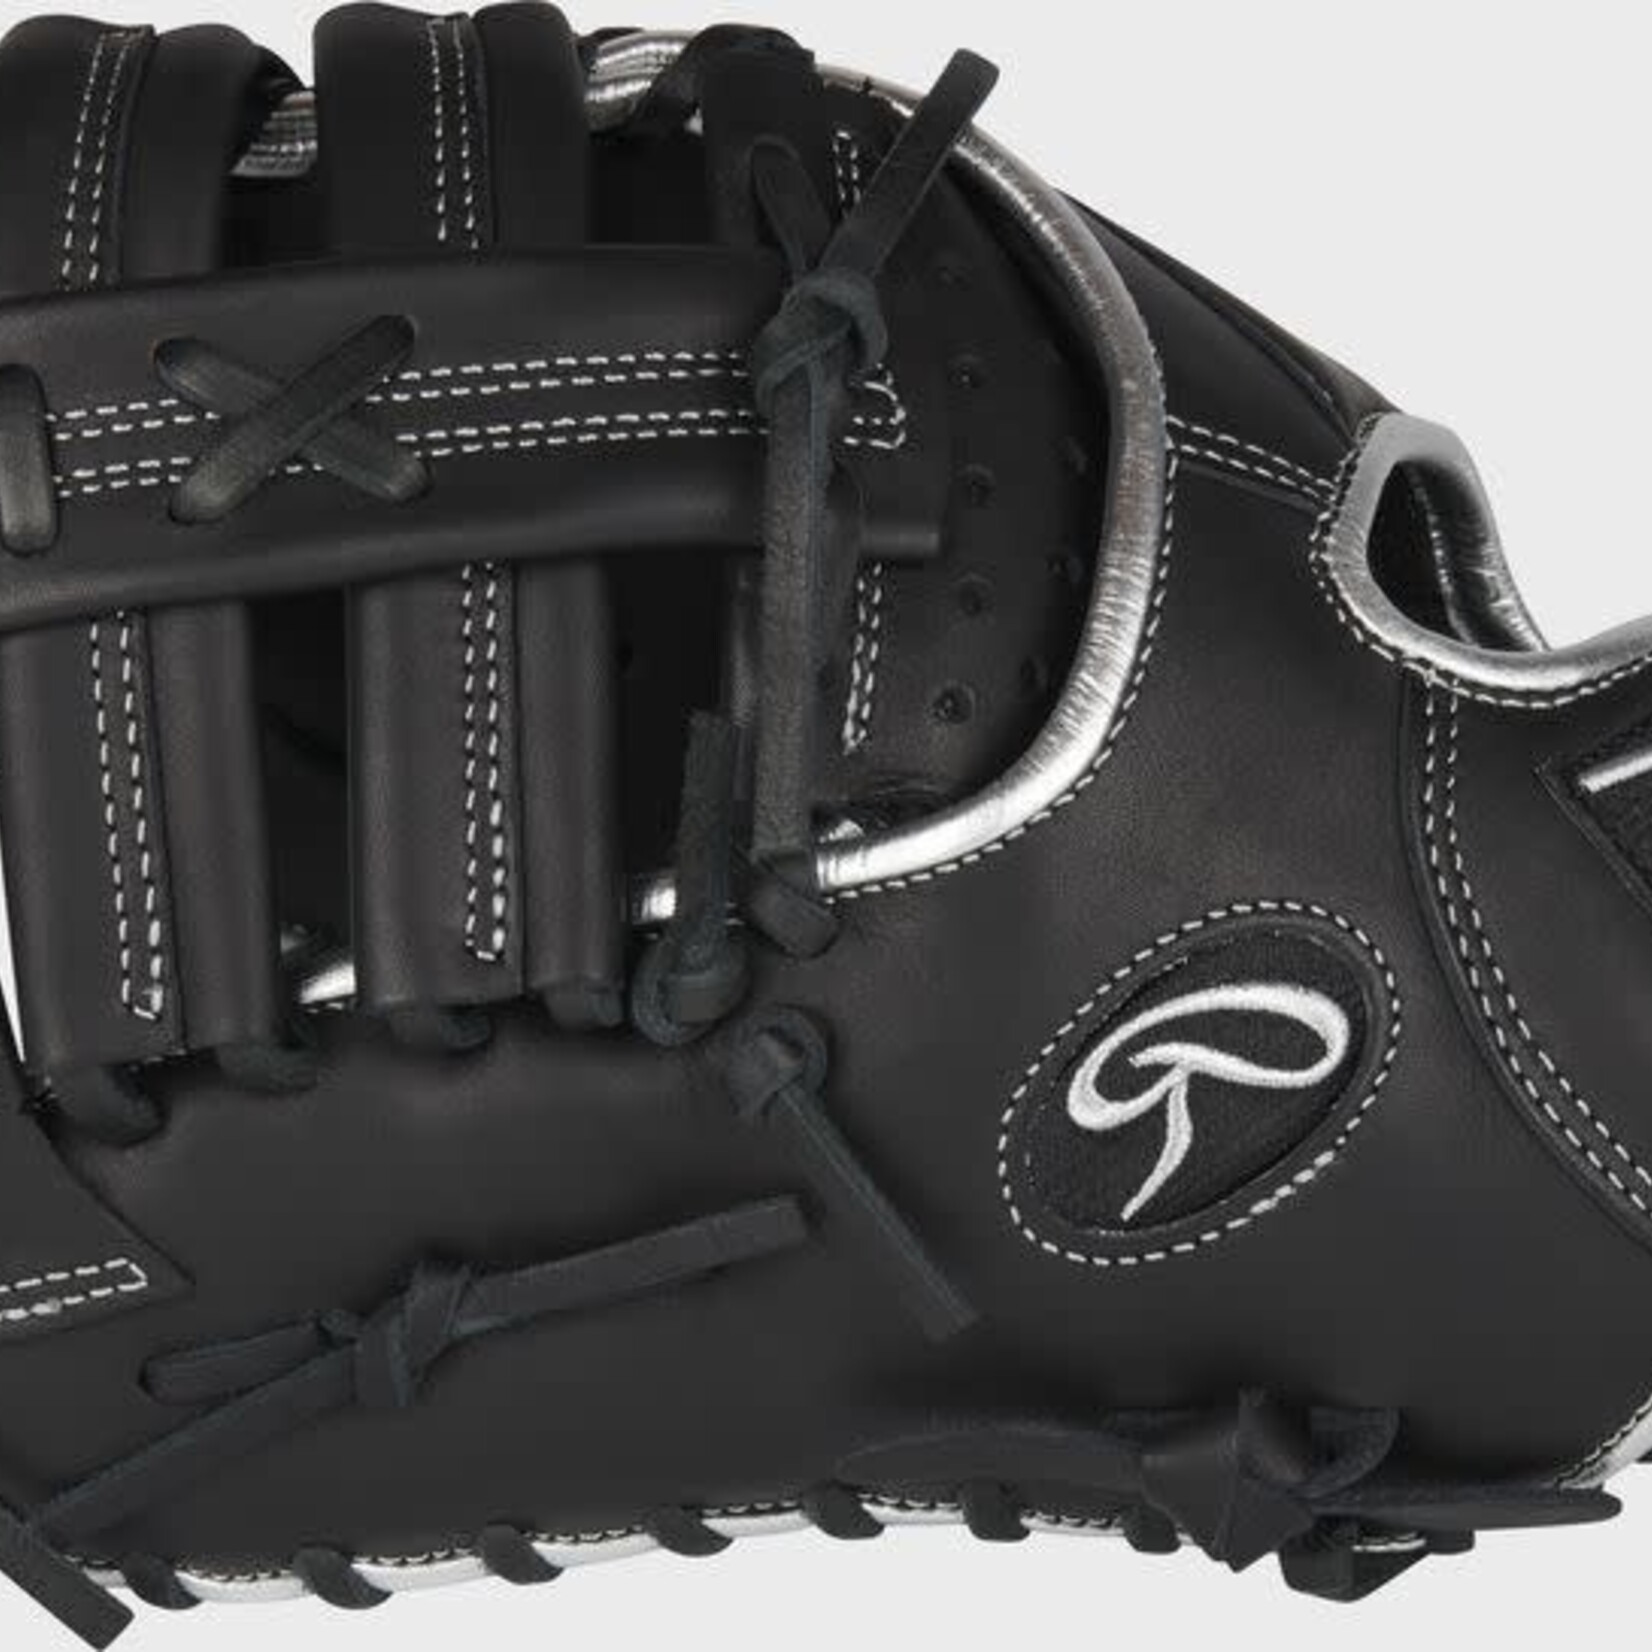 Rawlings Rawlings Baseball Glove, Encore Series ECFBM-10B, 12”, Full Right, First Base Mitt